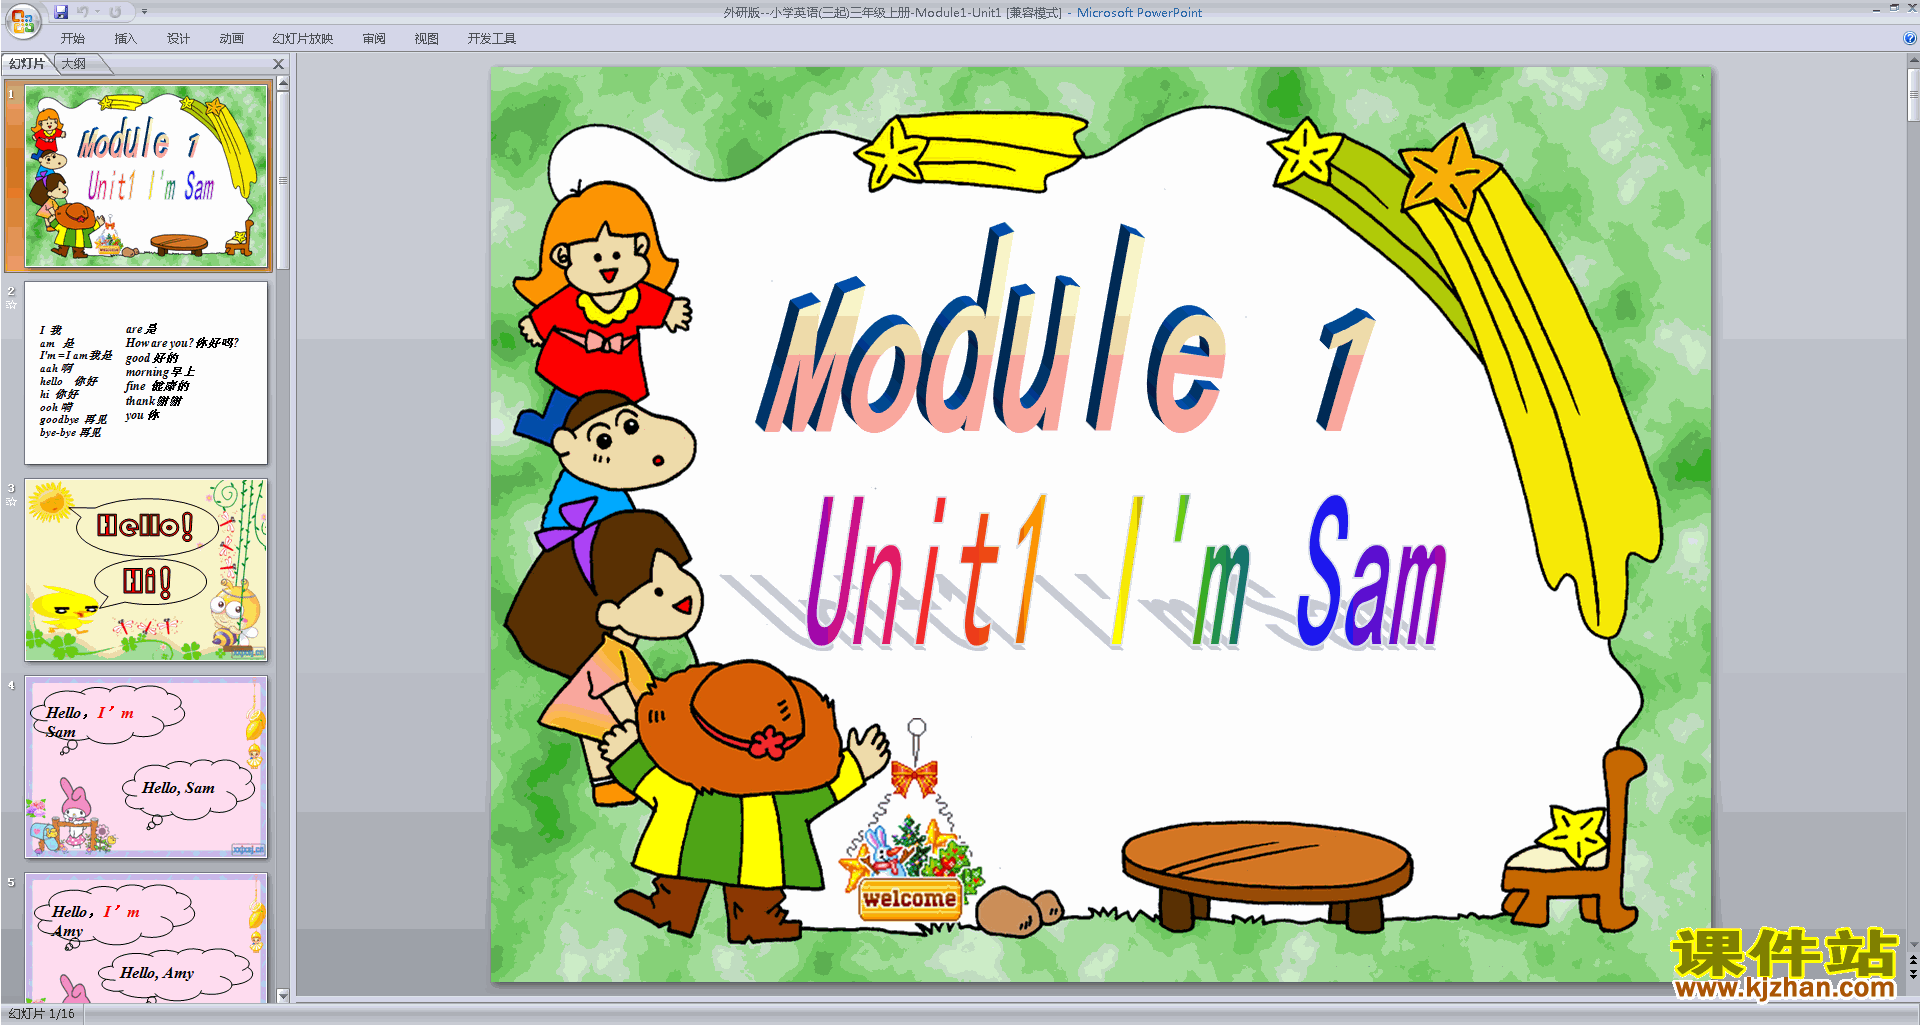 Module1 Unit1 I